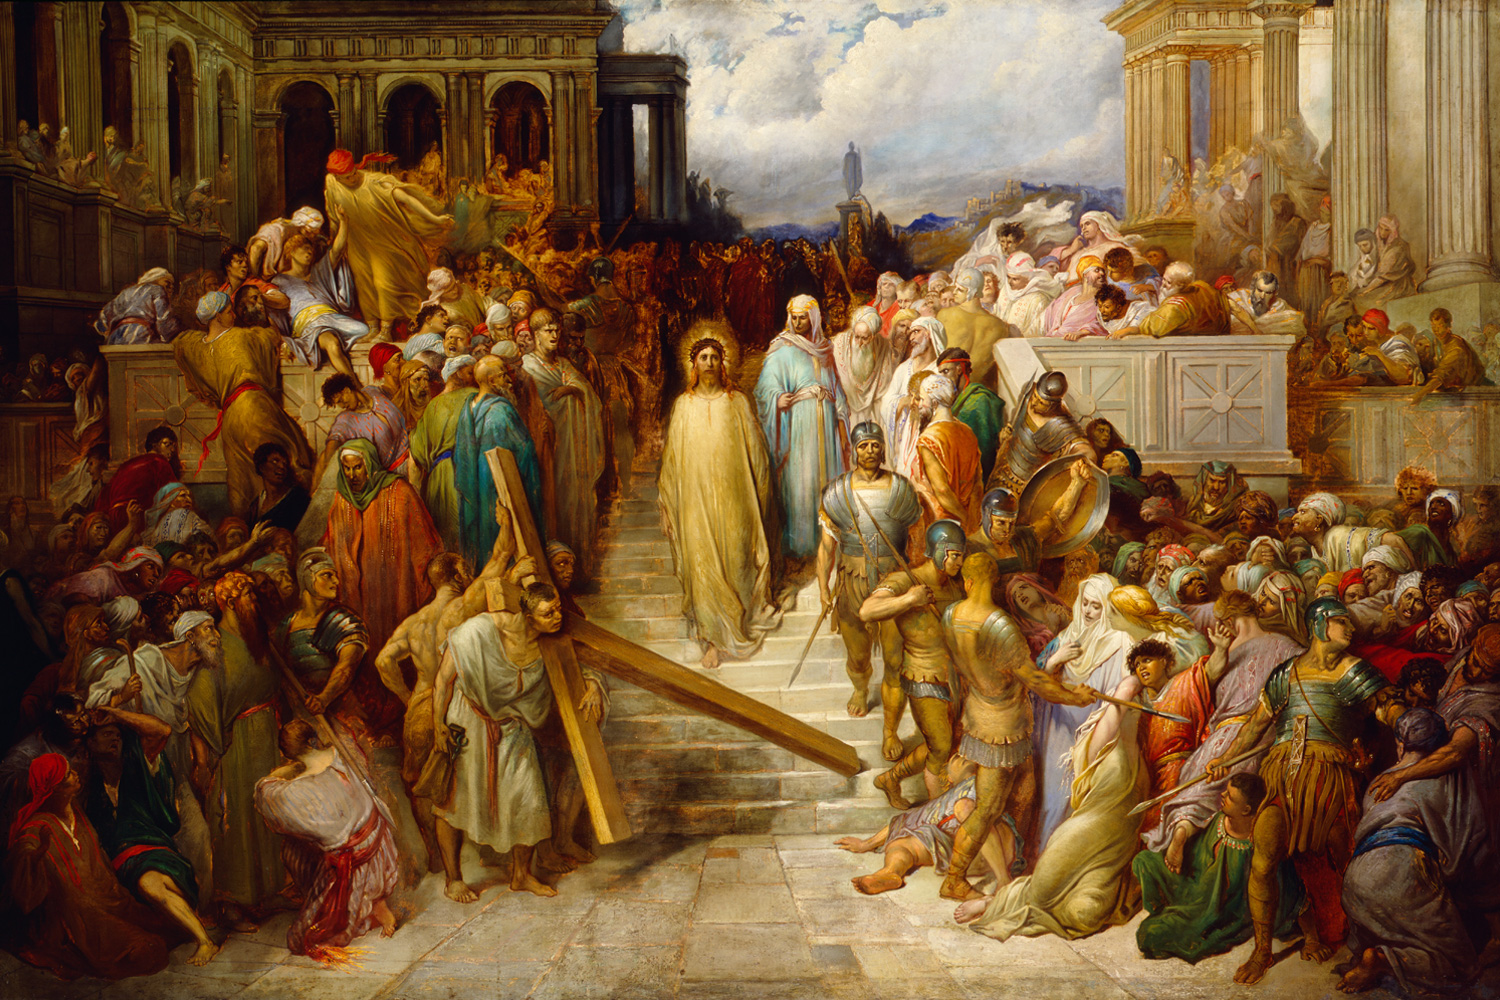 Christ Leaving the Praetorium, Gustave Dore in M&G Collection